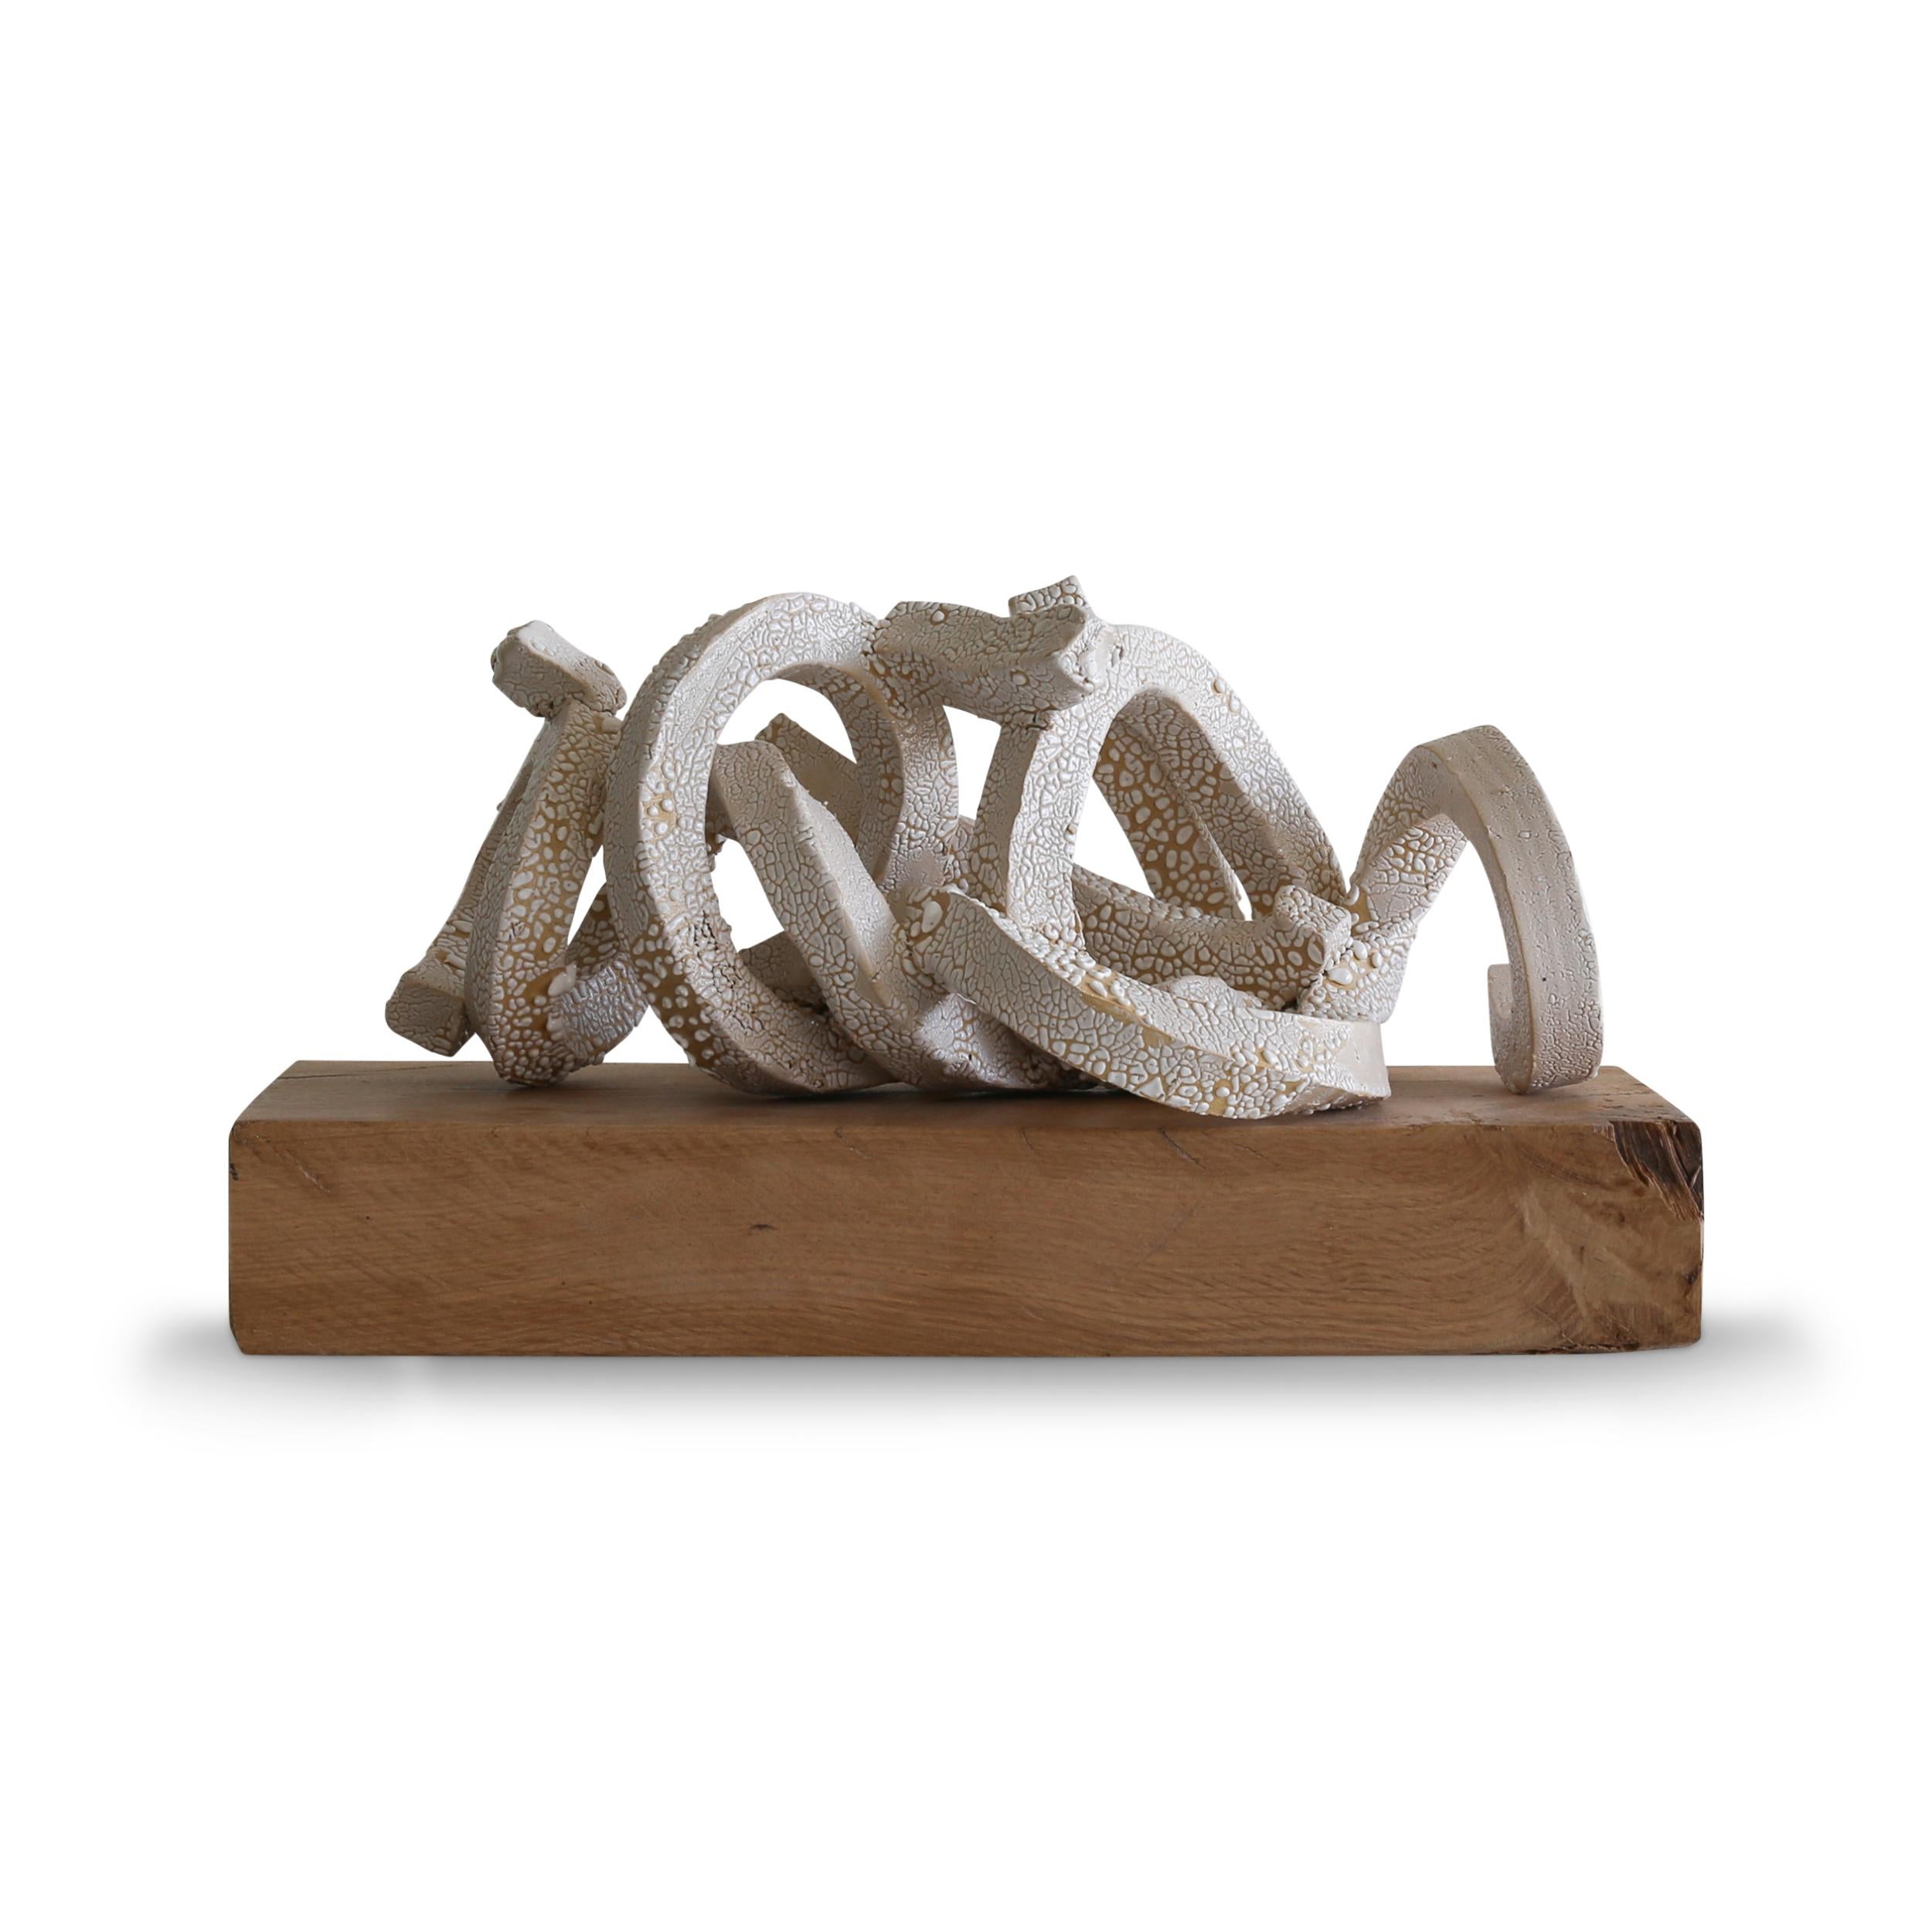 Brandon Reese Abstract Sculpture – Bounce